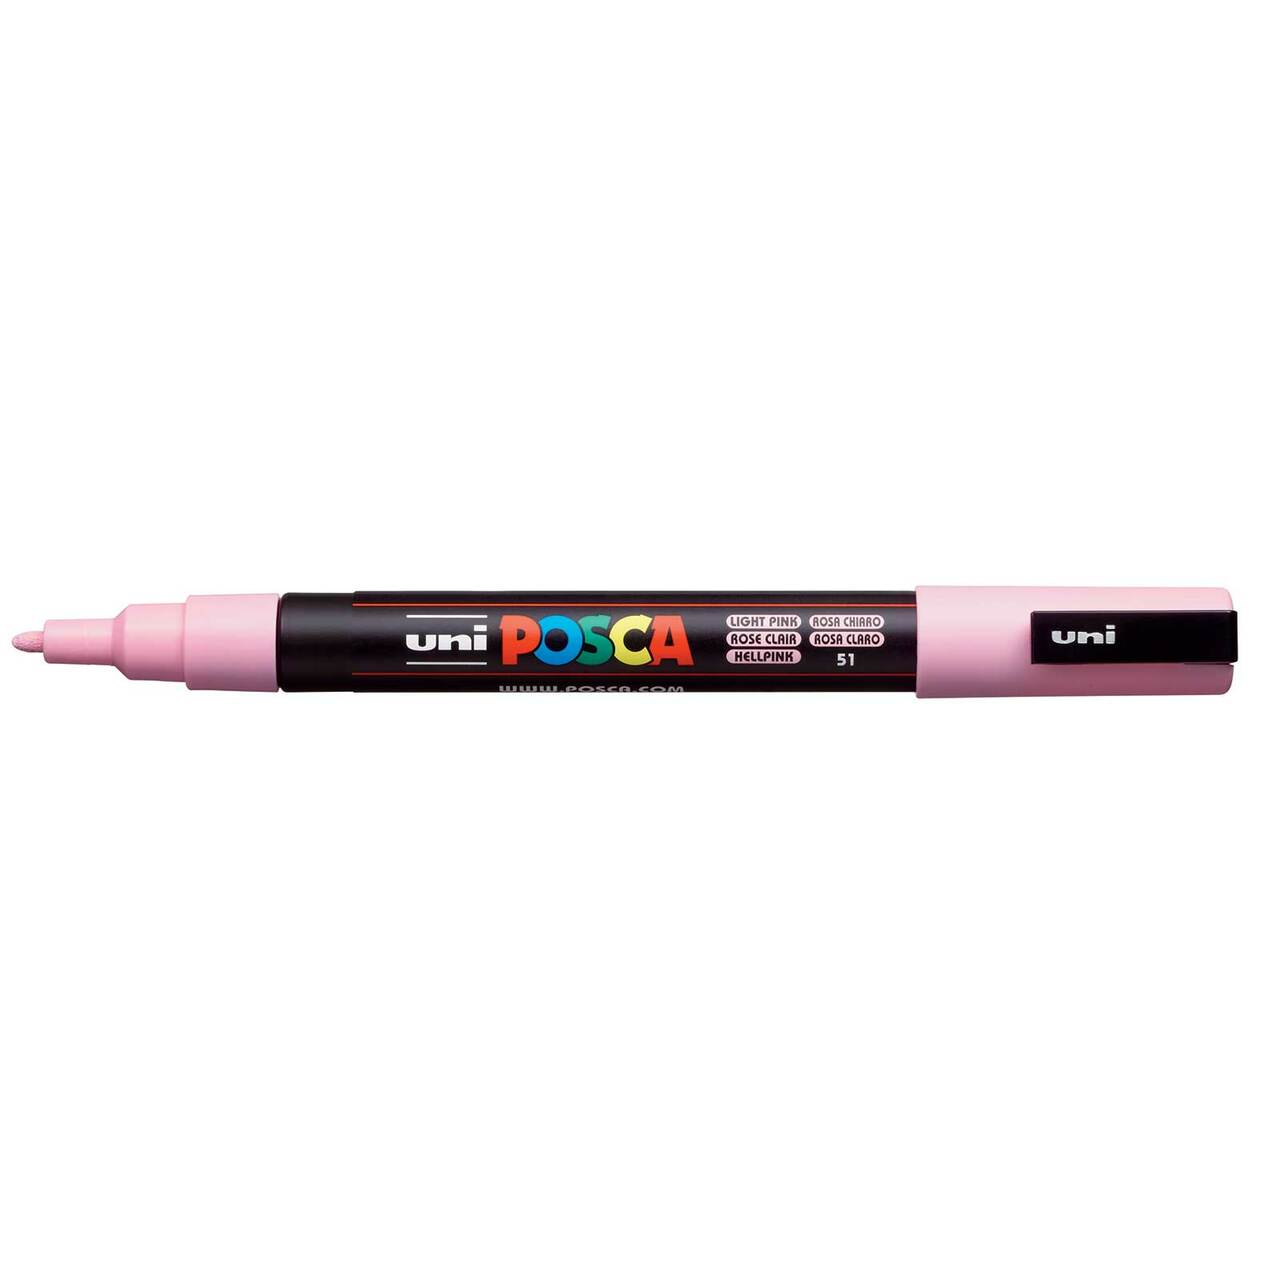 POSCA Acrylic Paint Markers - PC-3M 0.9-1.3mm Bullet Tip - Light Pink by POSCA - K. A. Artist Shop